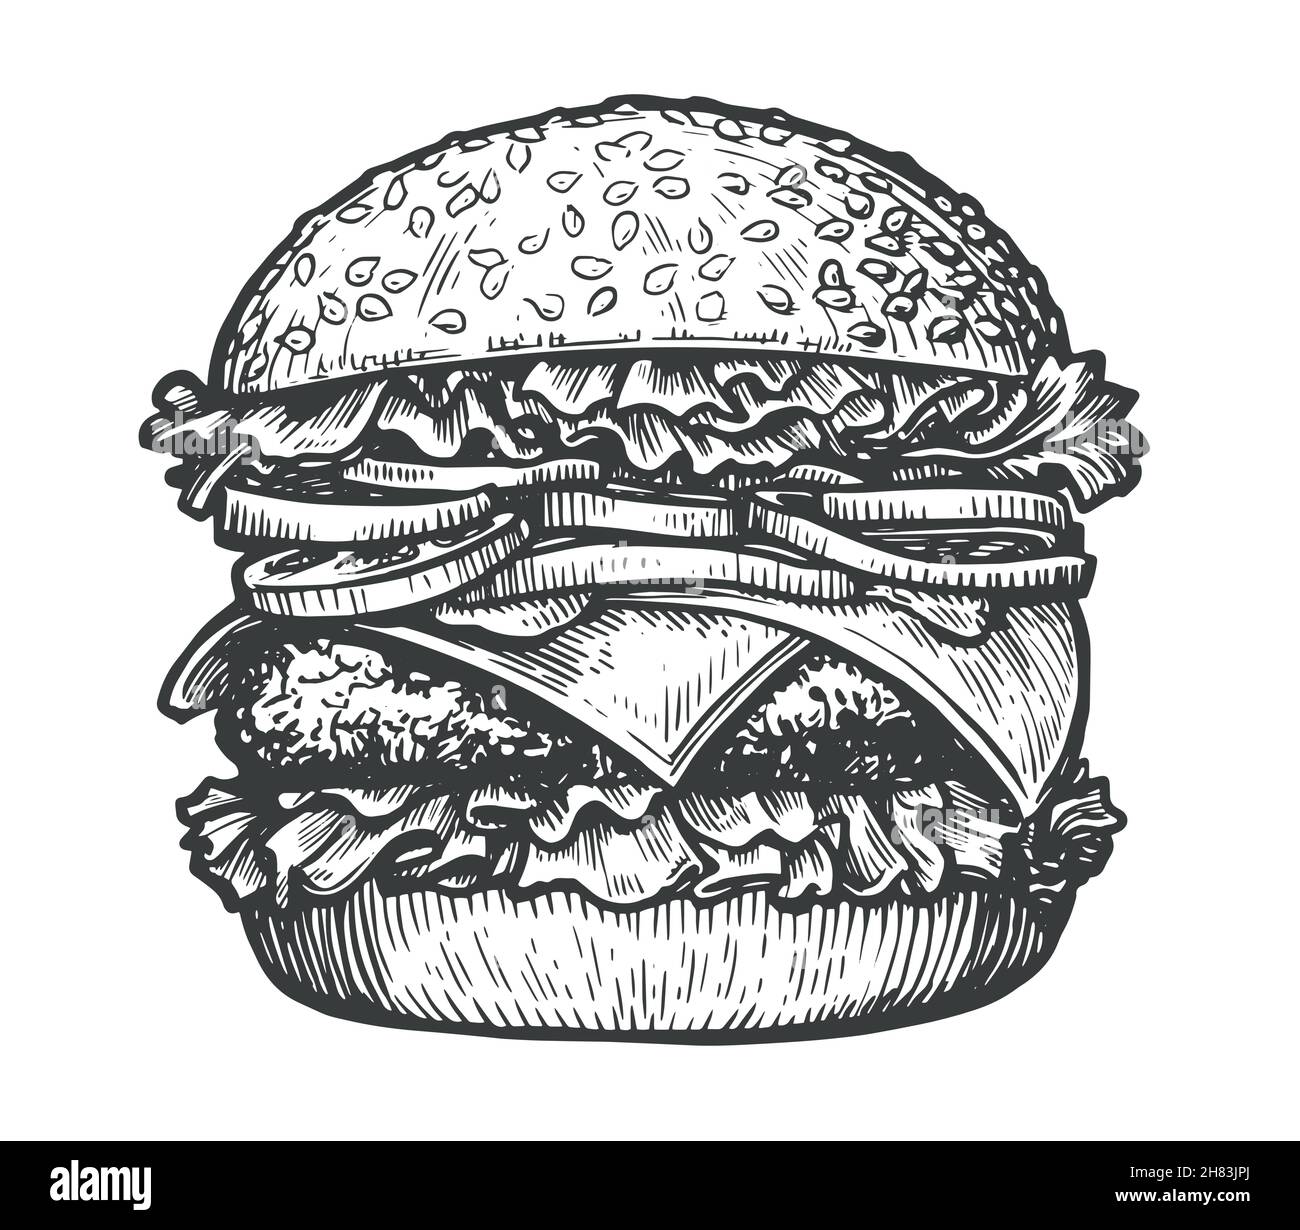 1633 Kids Drawing Burger Images Stock Photos  Vectors  Shutterstock